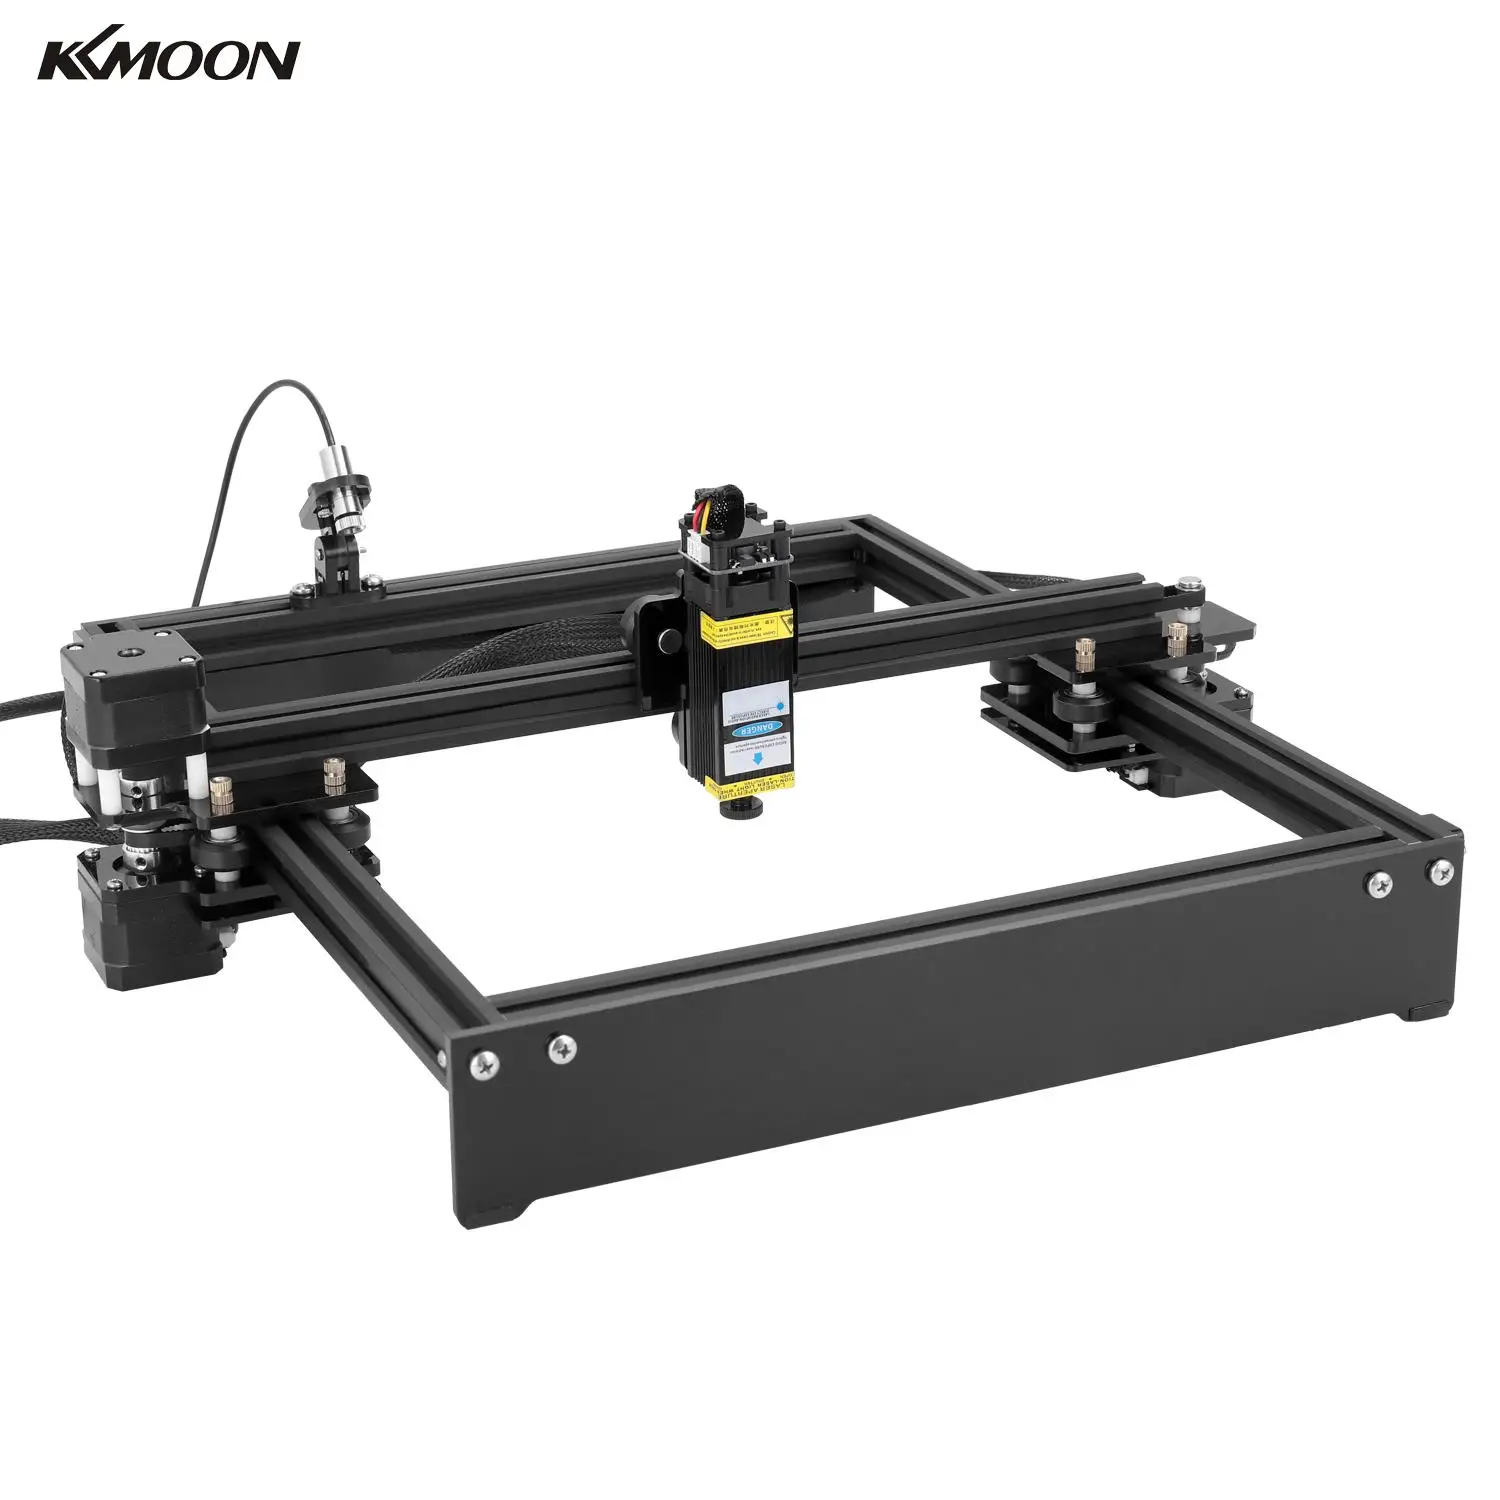 

KKMOON Portable Mini DIY 4.2 System Desktop Laser Engraver CNC Wood Router Machine Tool Laser Engraving Carving Machine Carver